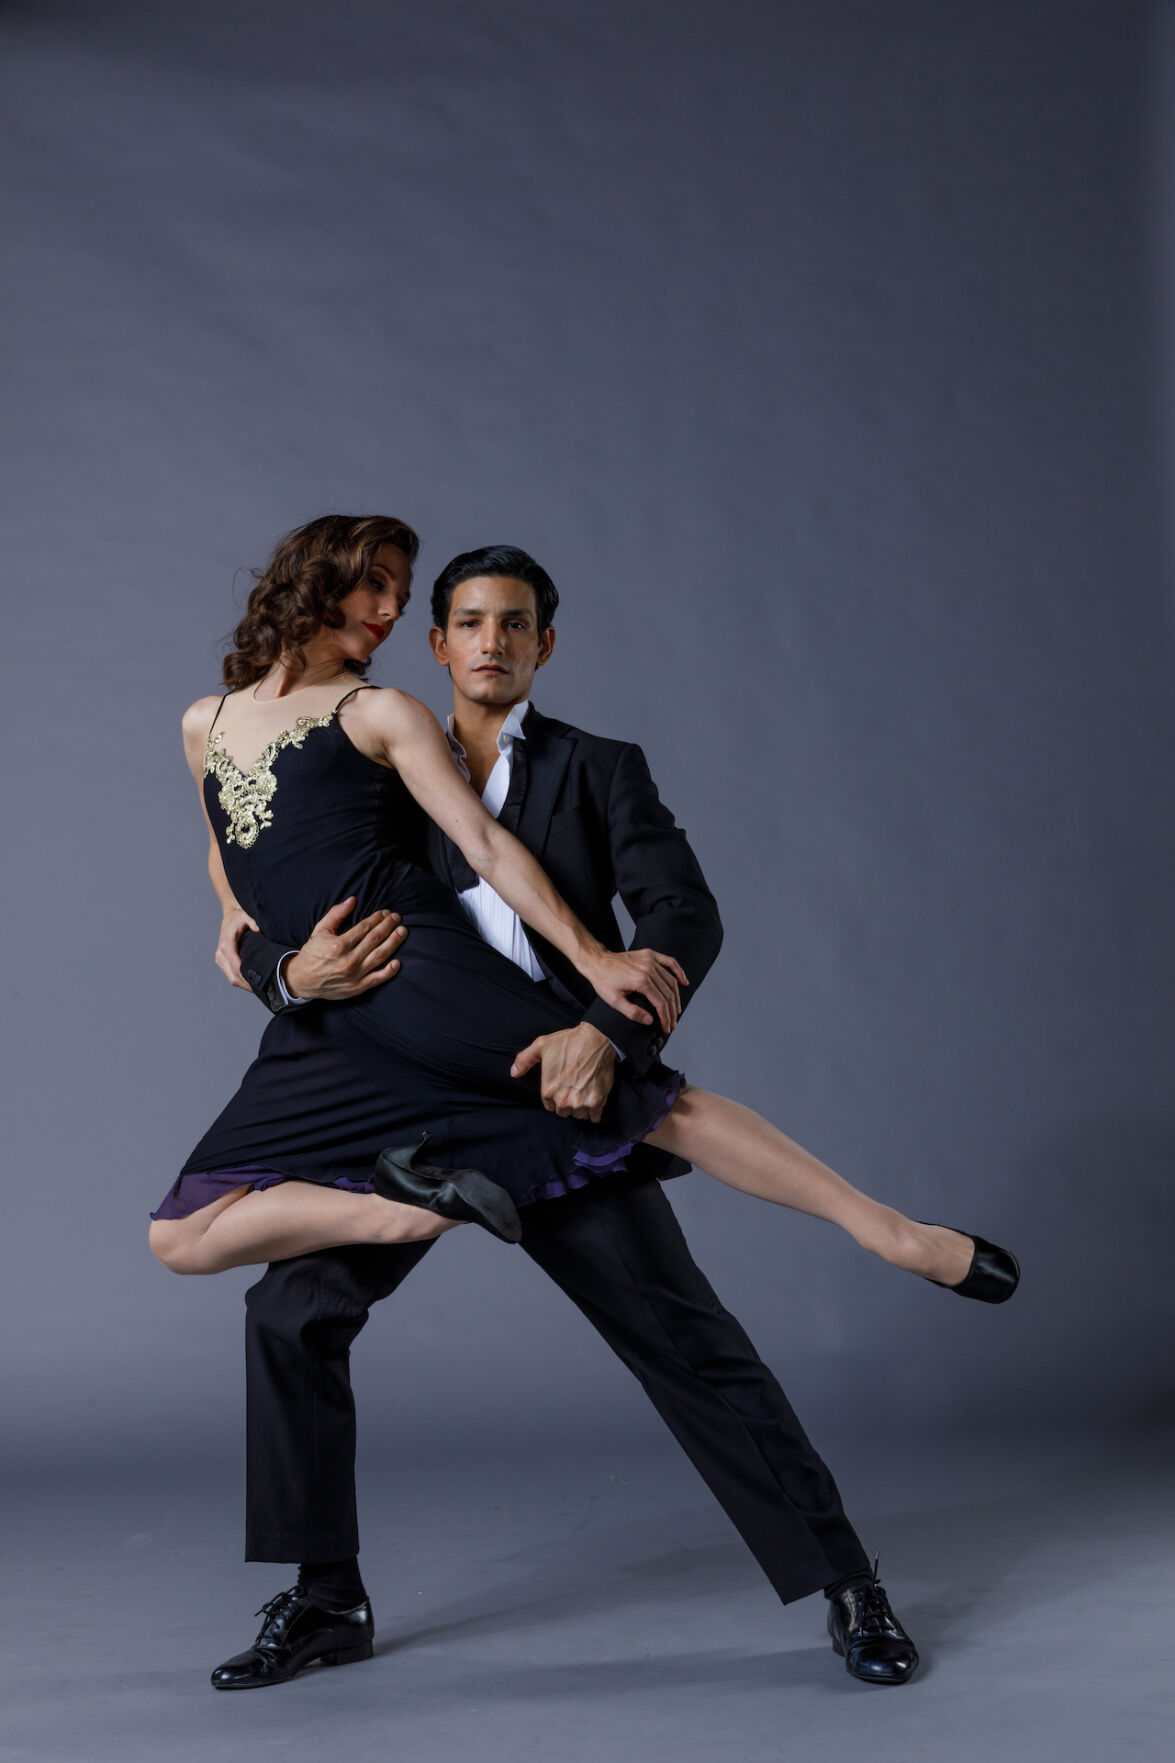 Little tango - Tango pose n°15 - Corinne Brenner